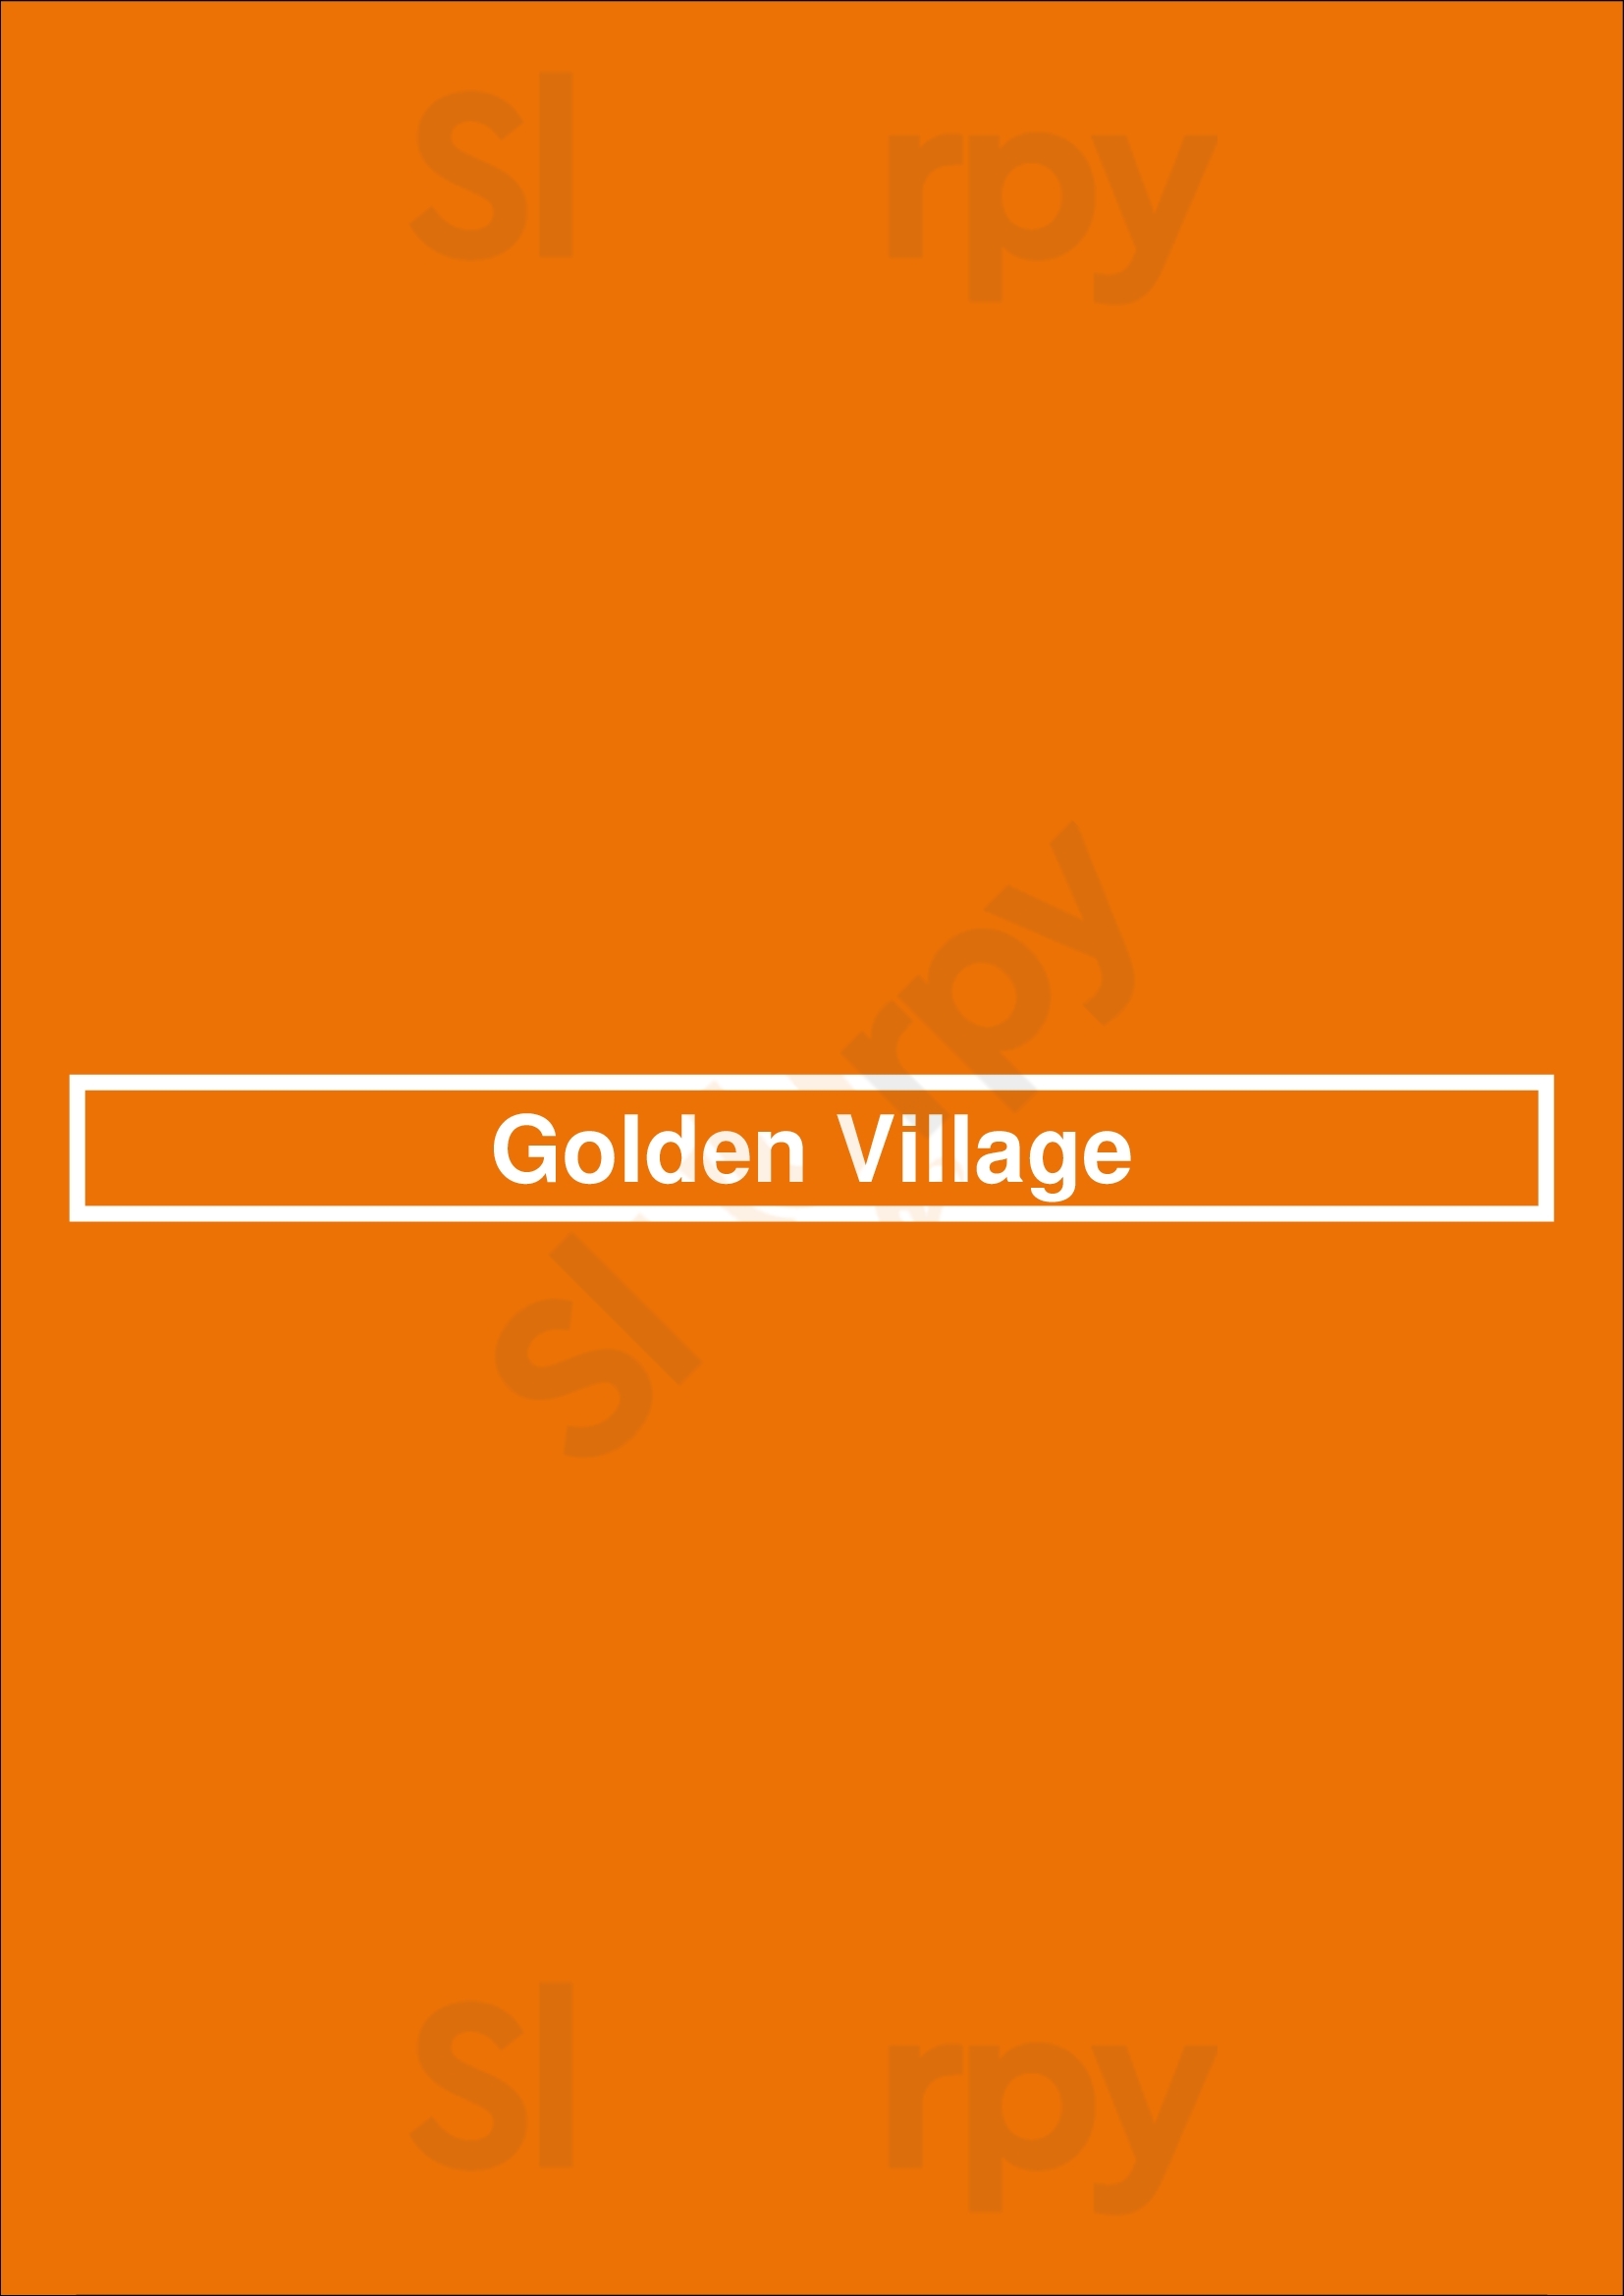 Golden Village Badhoevedorp Menu - 1